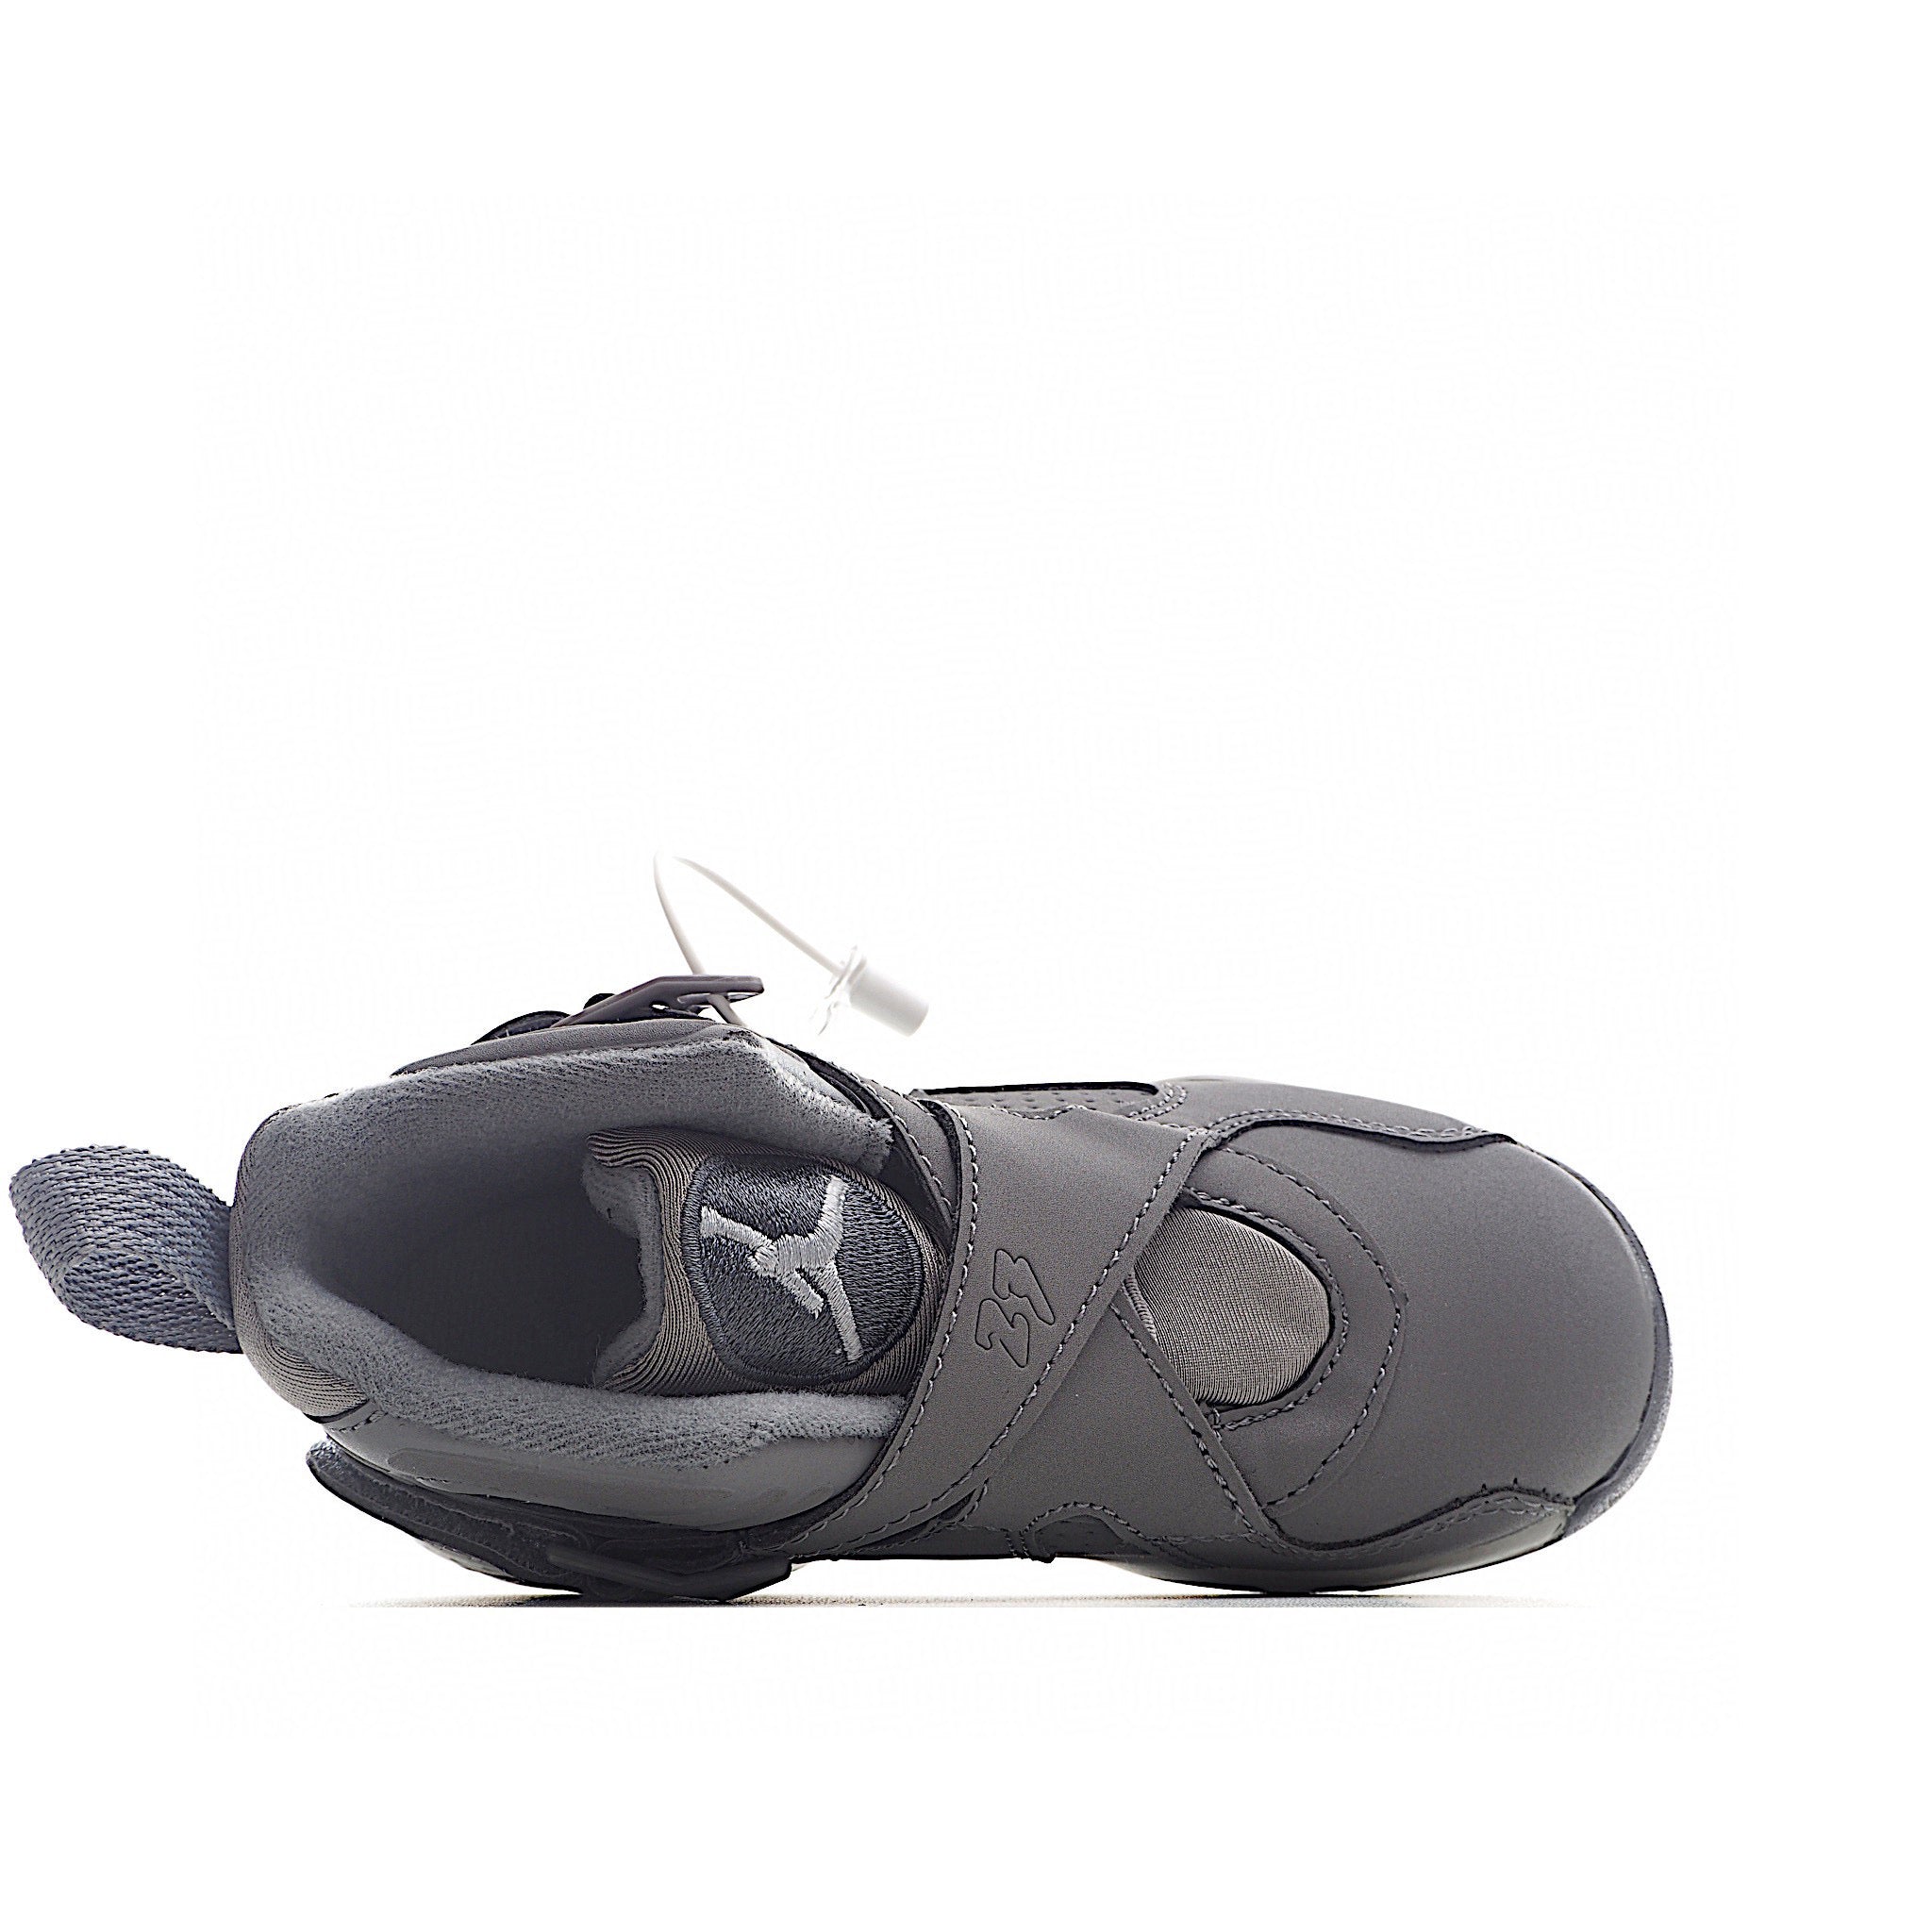 Nike air jordan 8 retro chaussures gris foncé